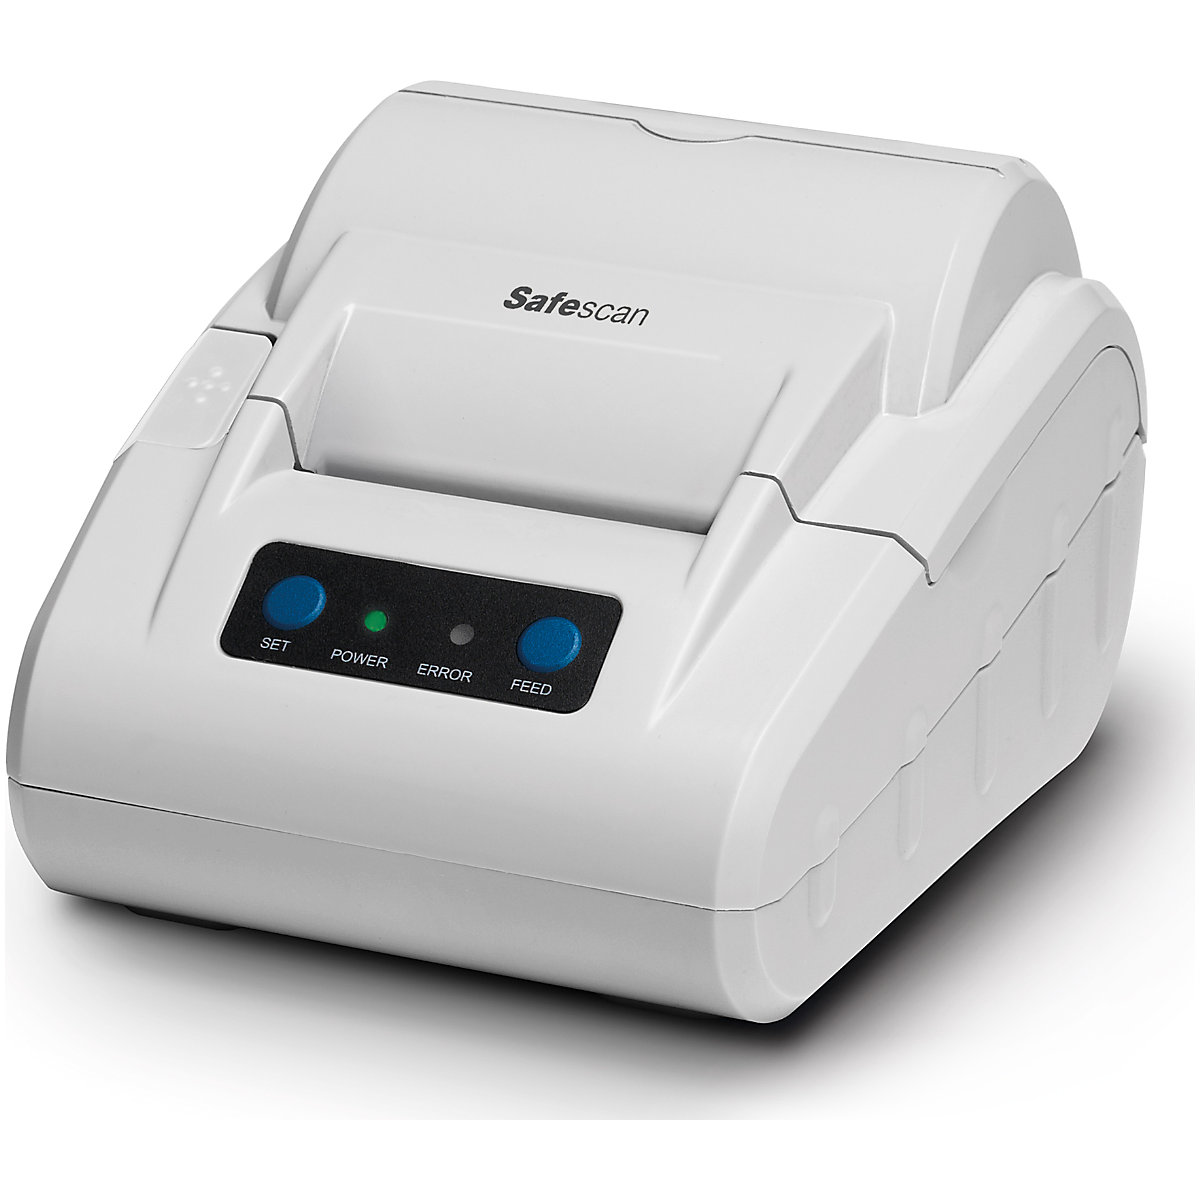 Impressora térmica – Safescan